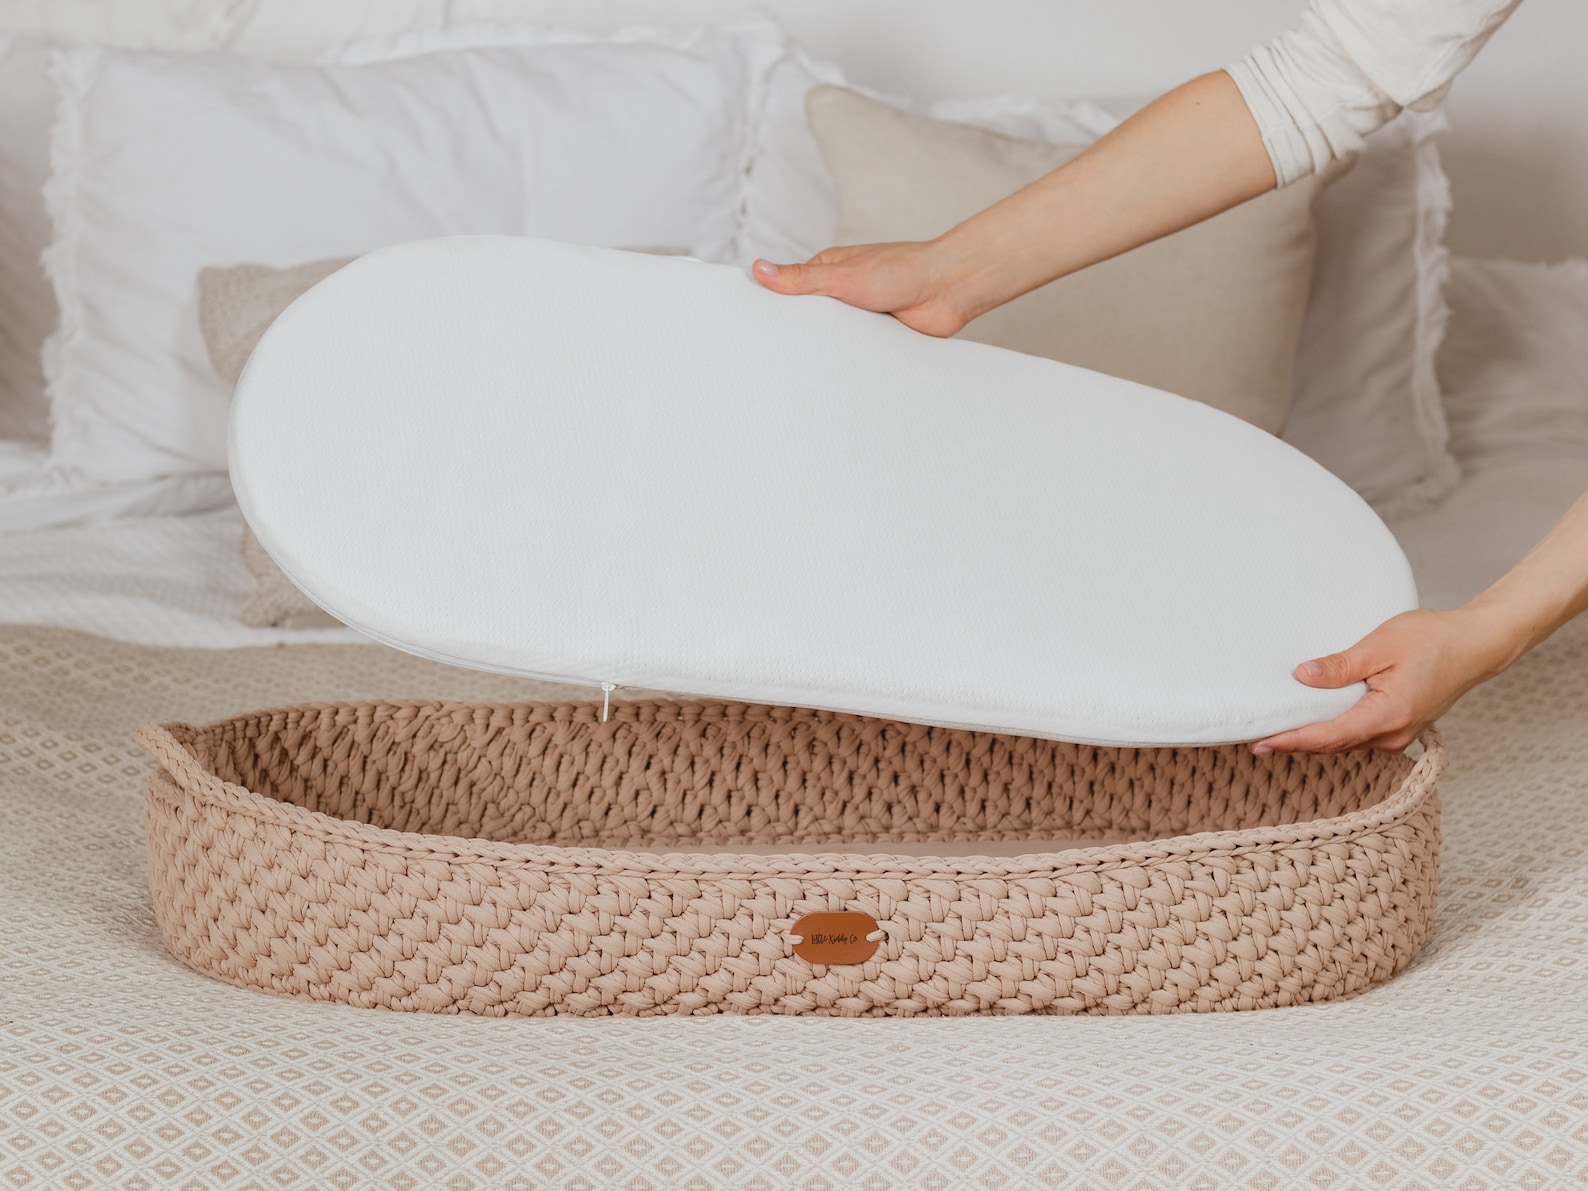 mattress pad for tadpole moses basket